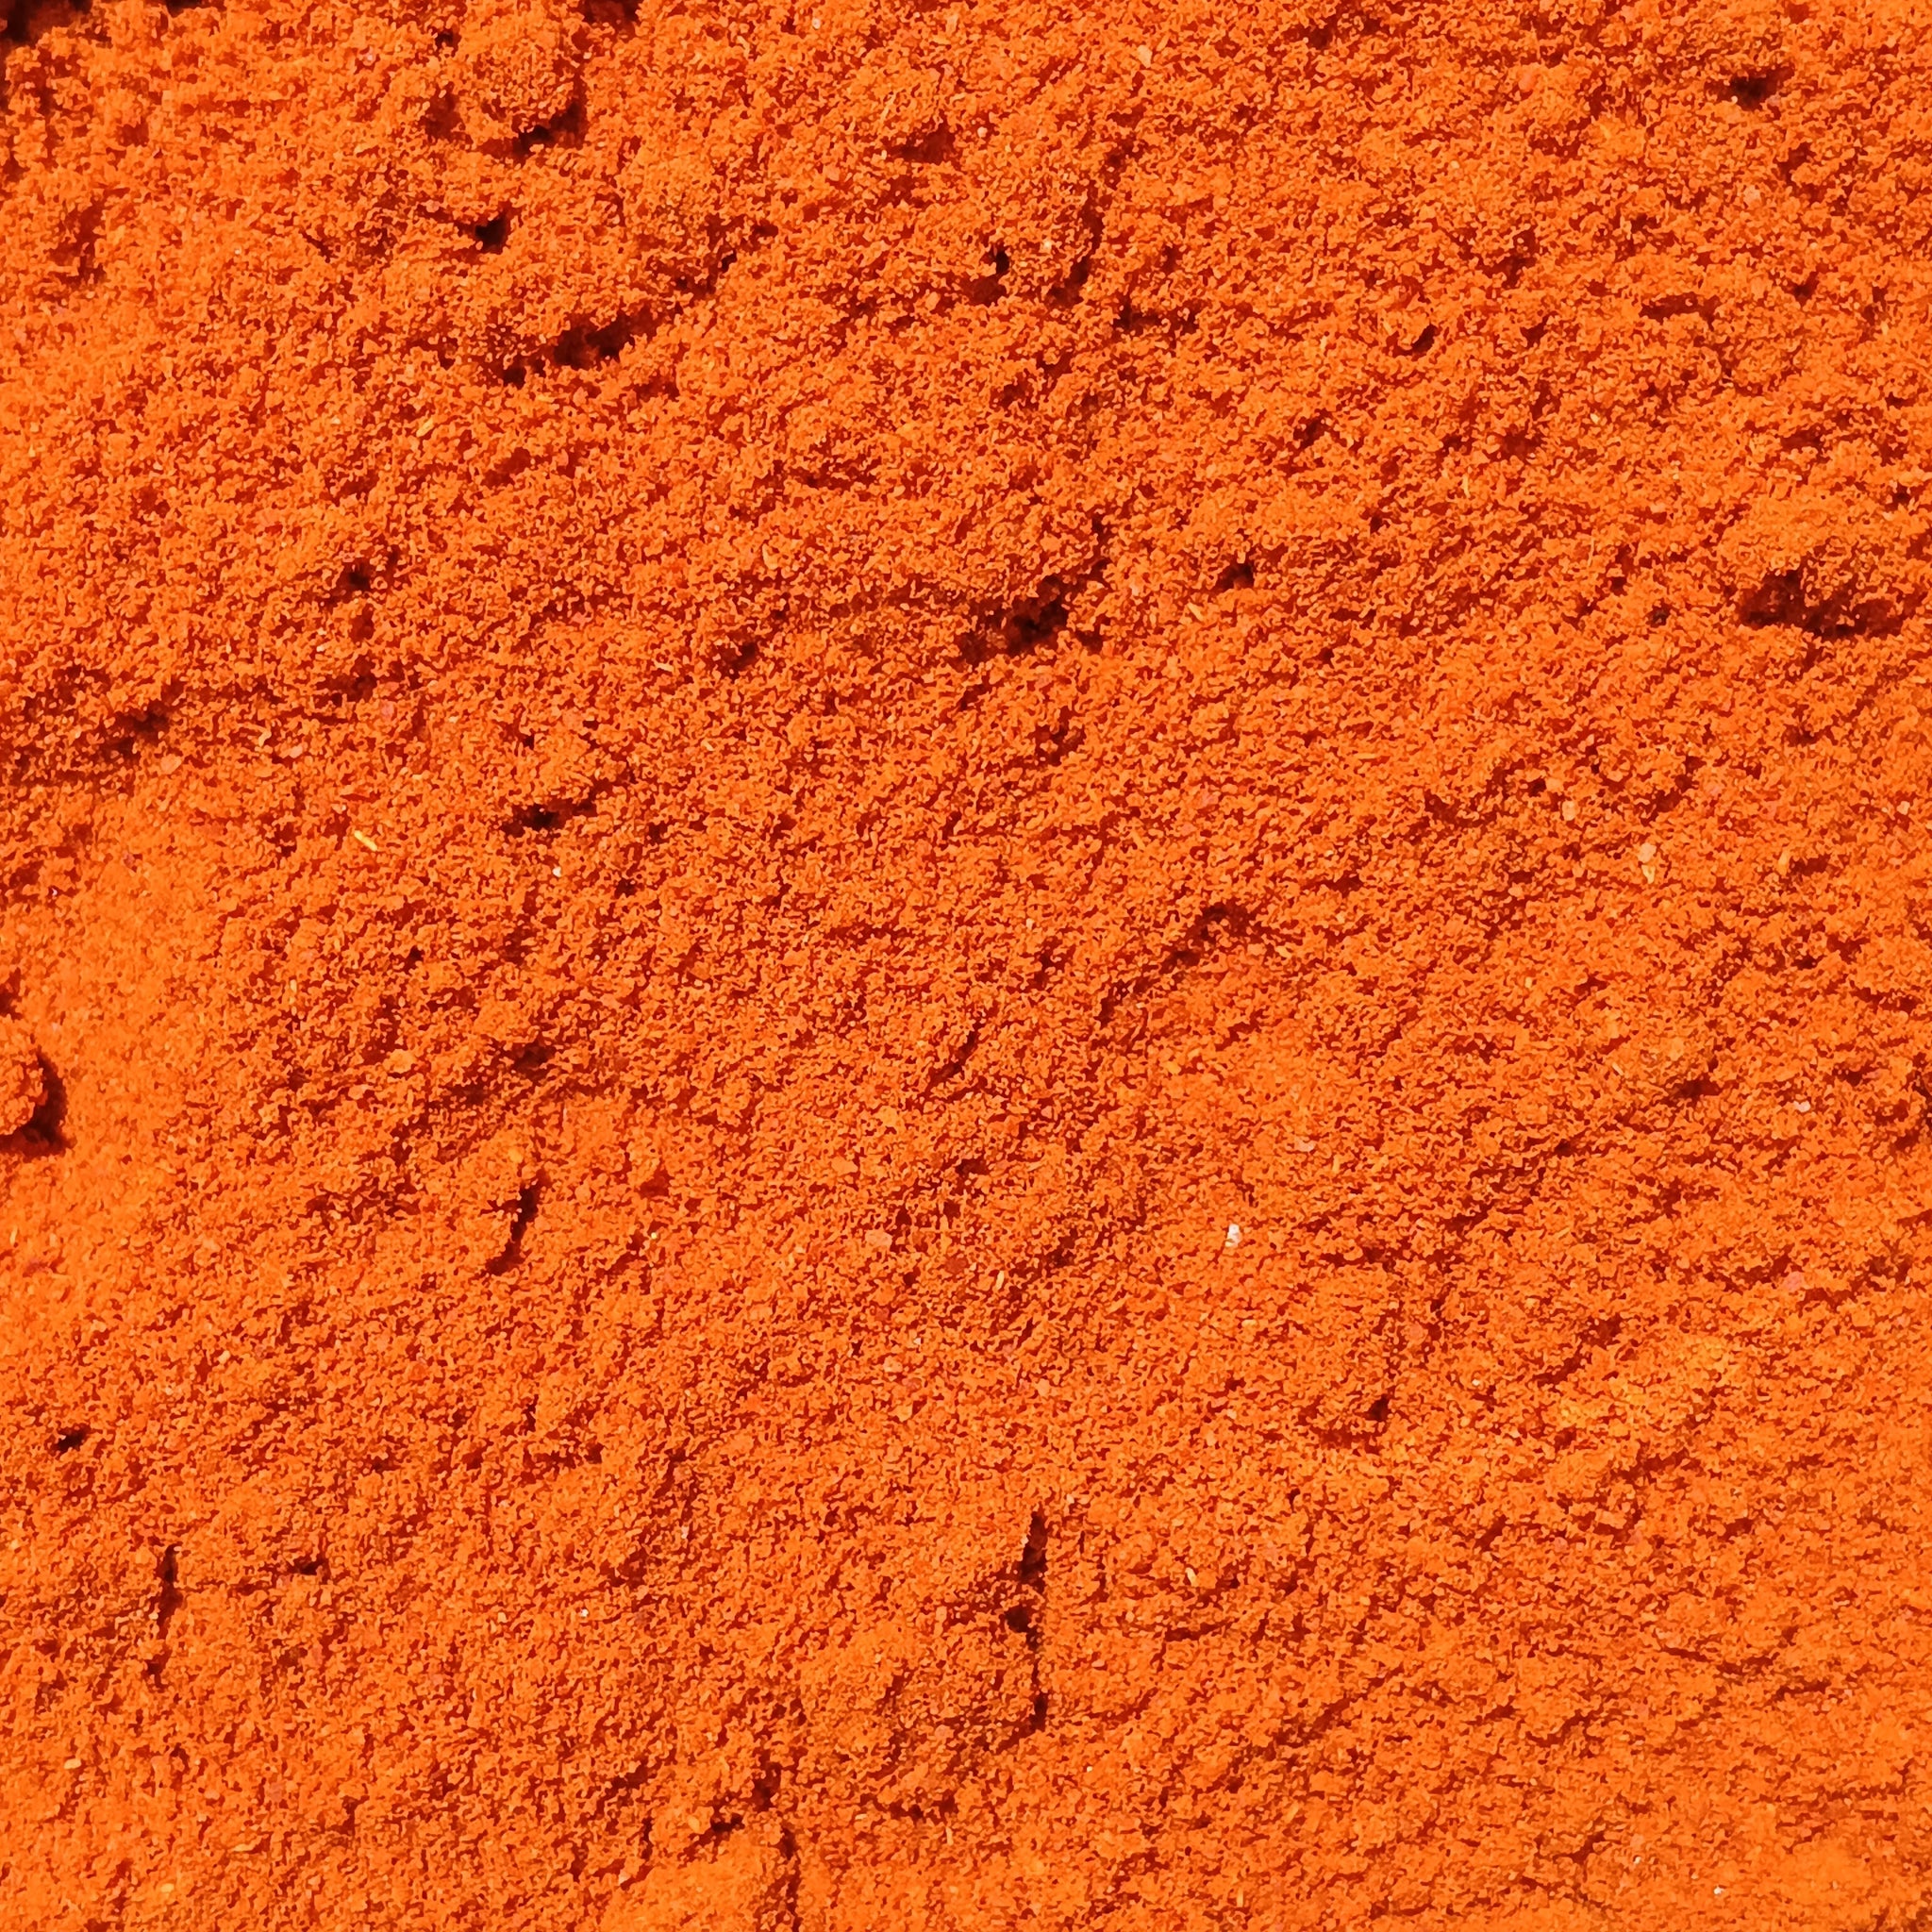 Cretan Hot Chili Powder